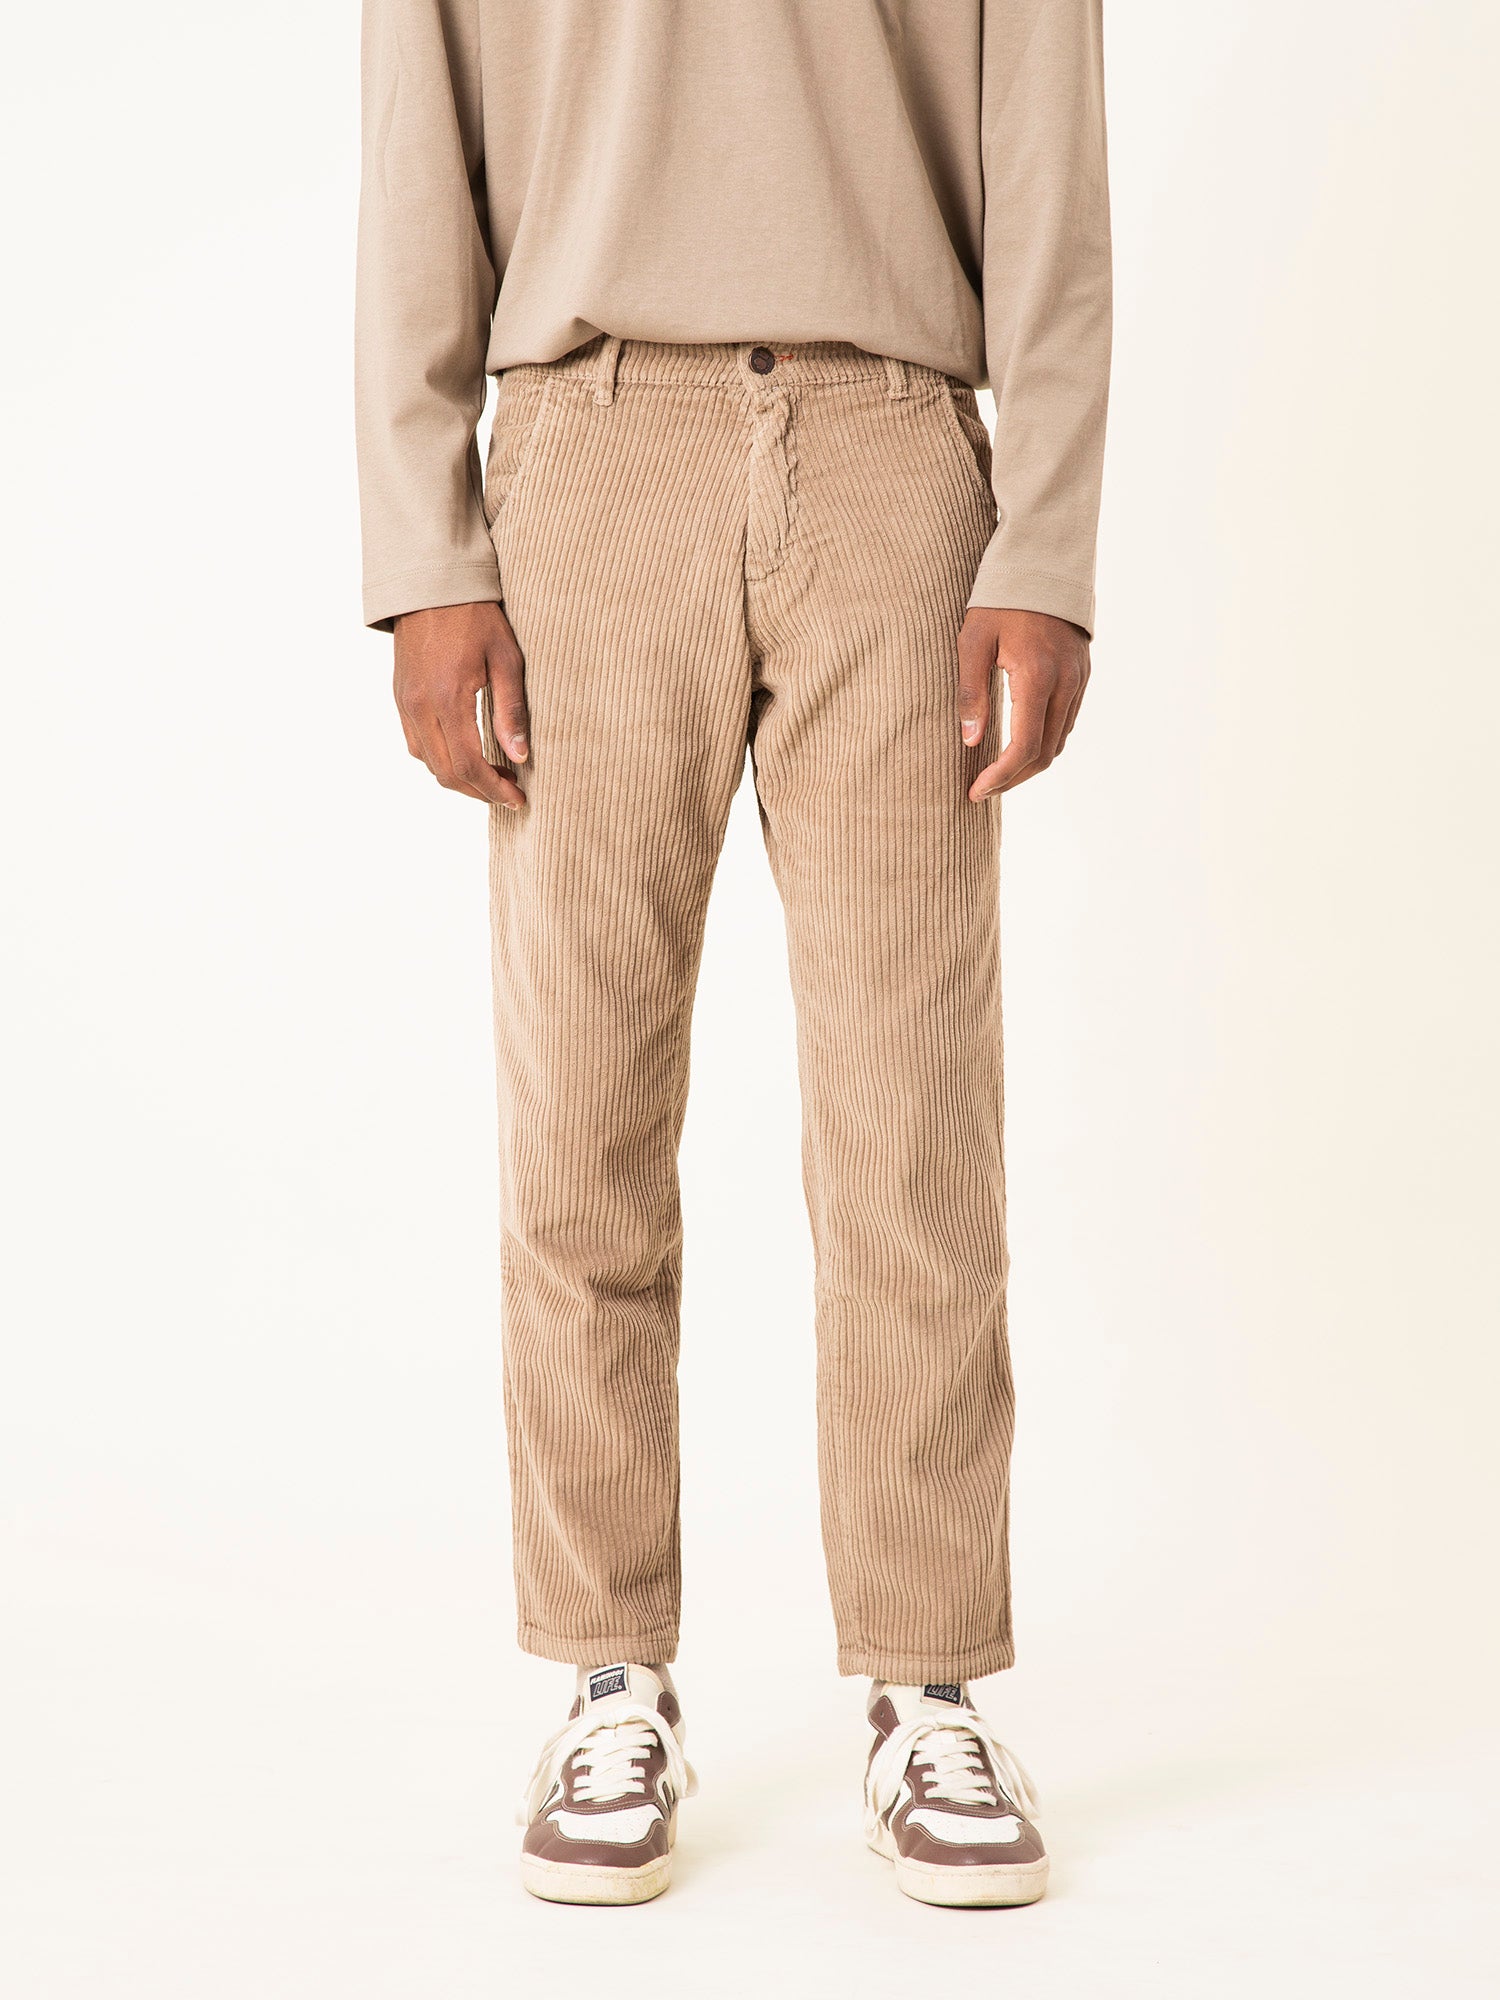 Pantalones vaqueros de pana de hombre Wrangler Arizona W12OEC455 de color  marrón